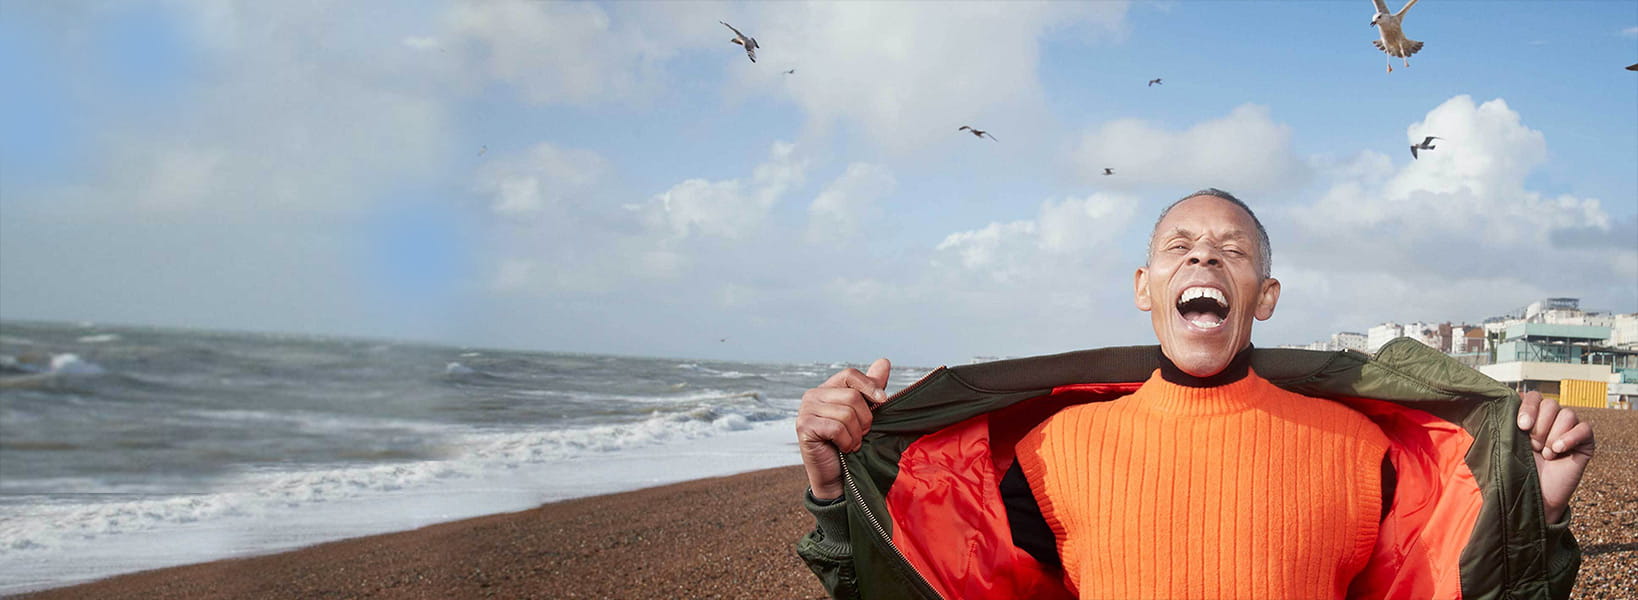 LeasePlan Free - Blije man met vogels op het strand